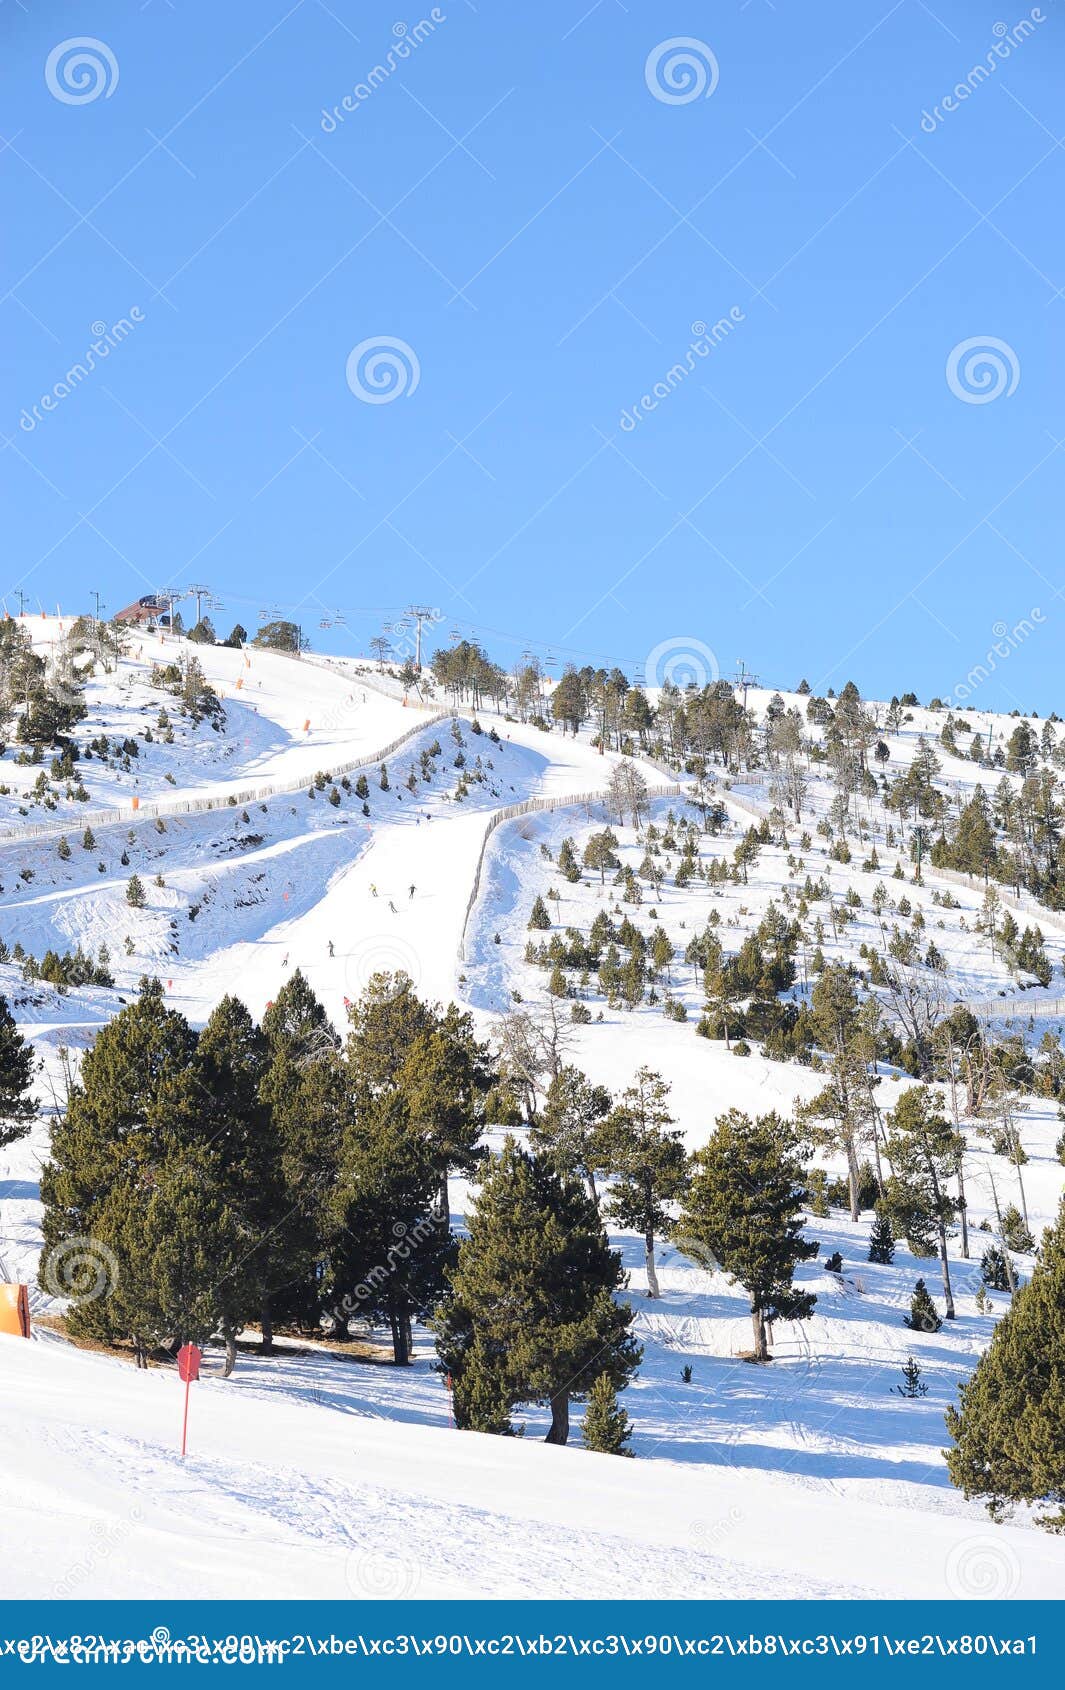 the ski slopes of la serra, vallnord, the sector of skiing pal, the principality of andorra, europe.